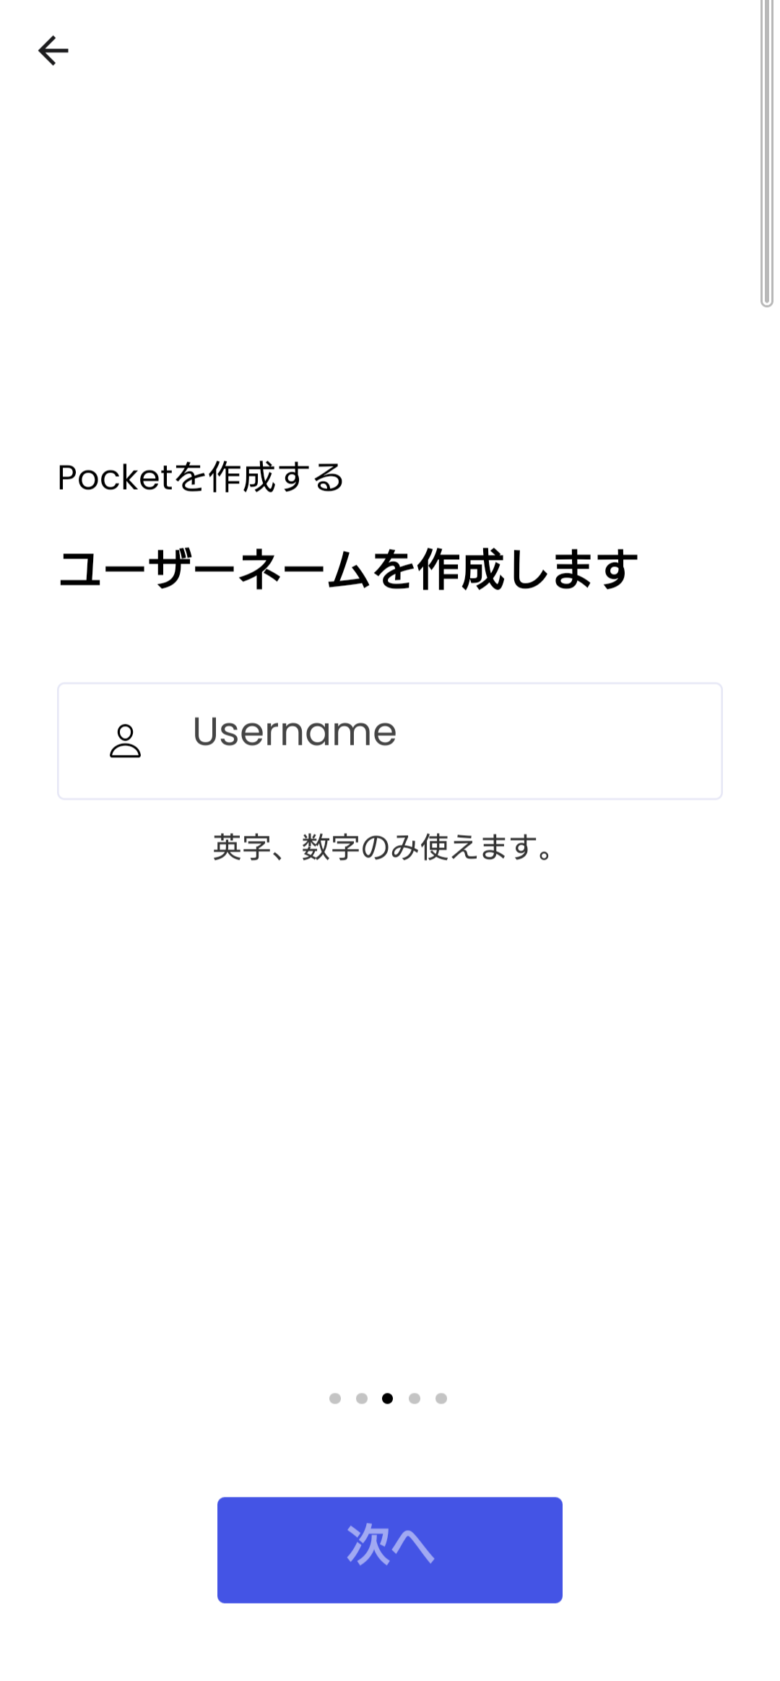 Johnny’s Pocket ユーザーネーム登録